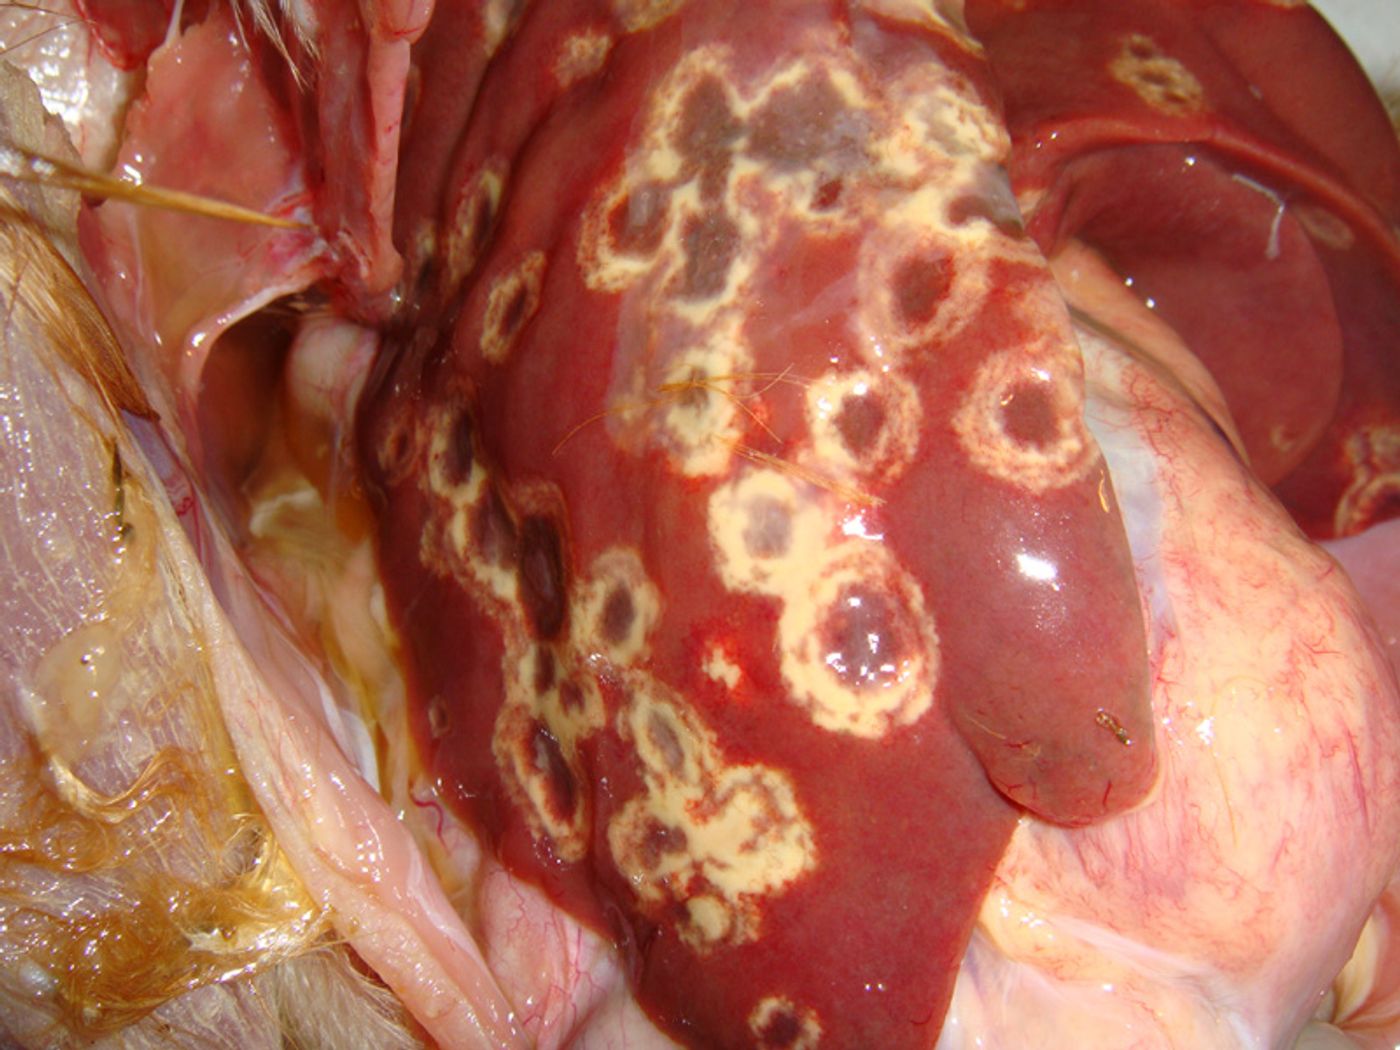 Blackhead causes "bulls-eye" lesions on the liver.